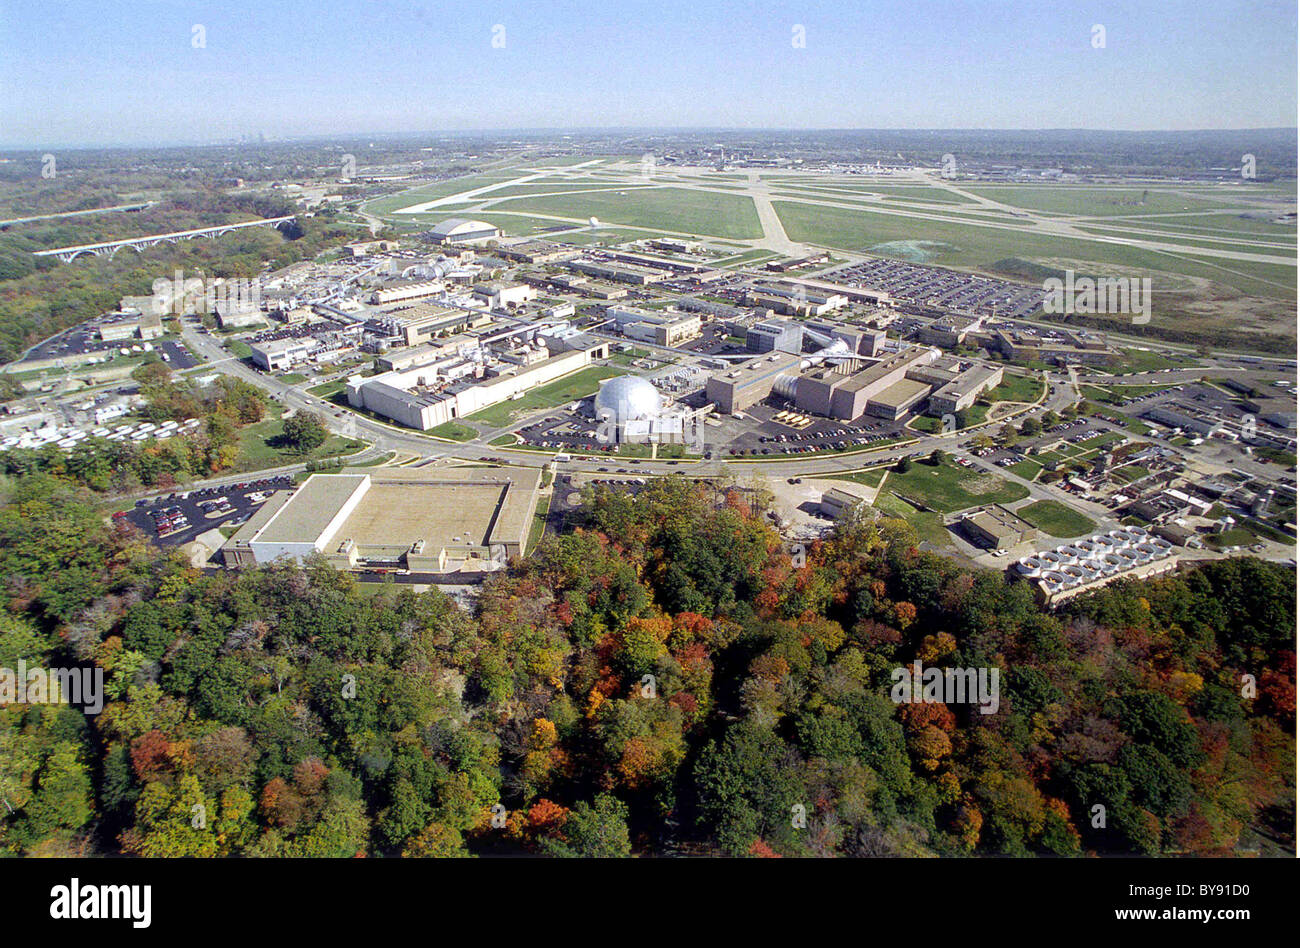 NASA John H. Glenn Research Center at Lewis Field, Cleveland, Ohio. Stock Photo